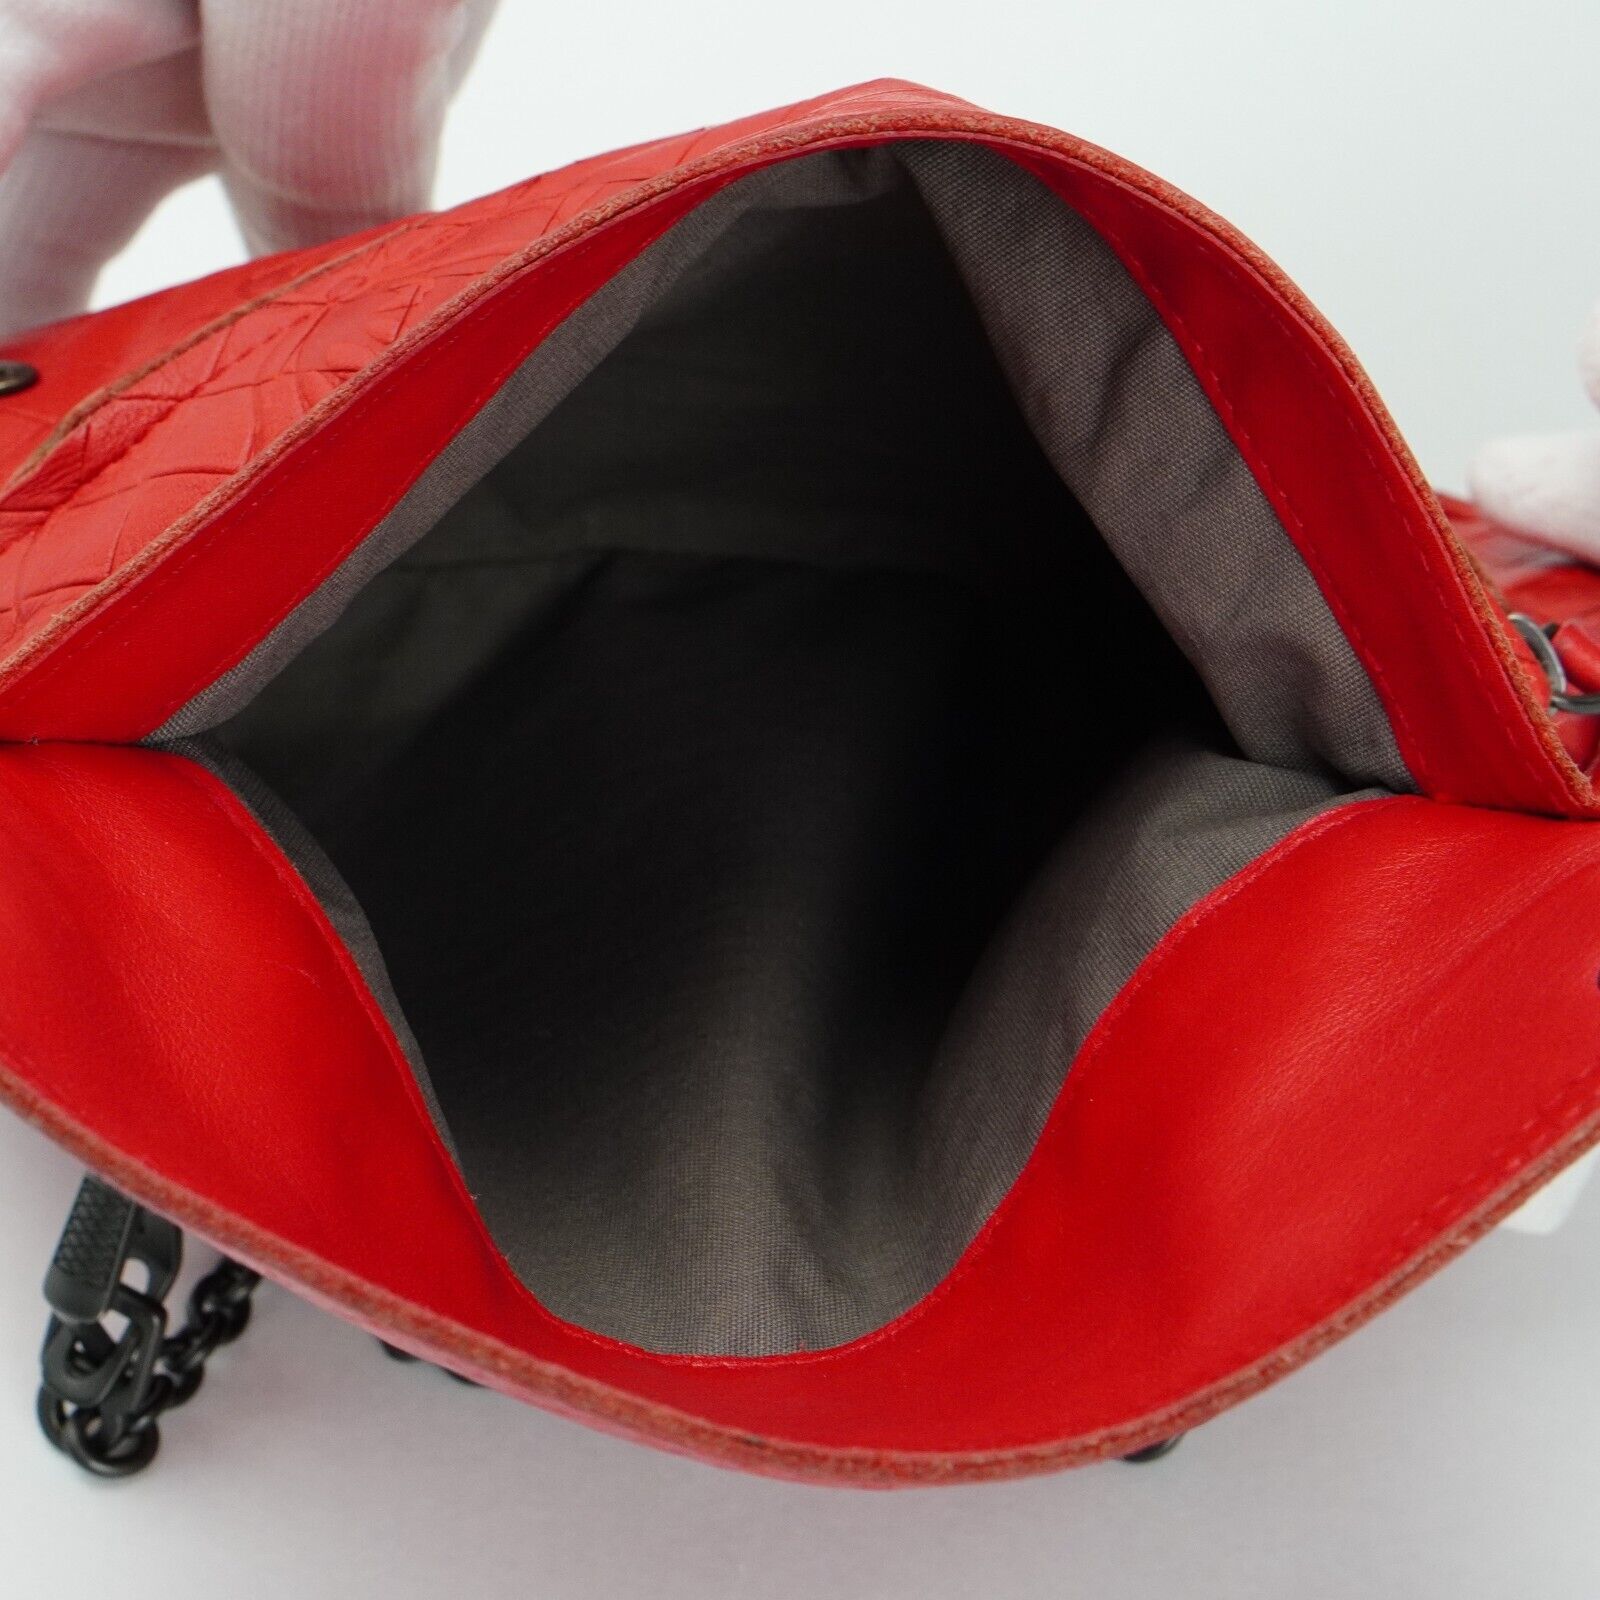 Bottega Veneta Olimpia mini Crossbody Leather Bag Red